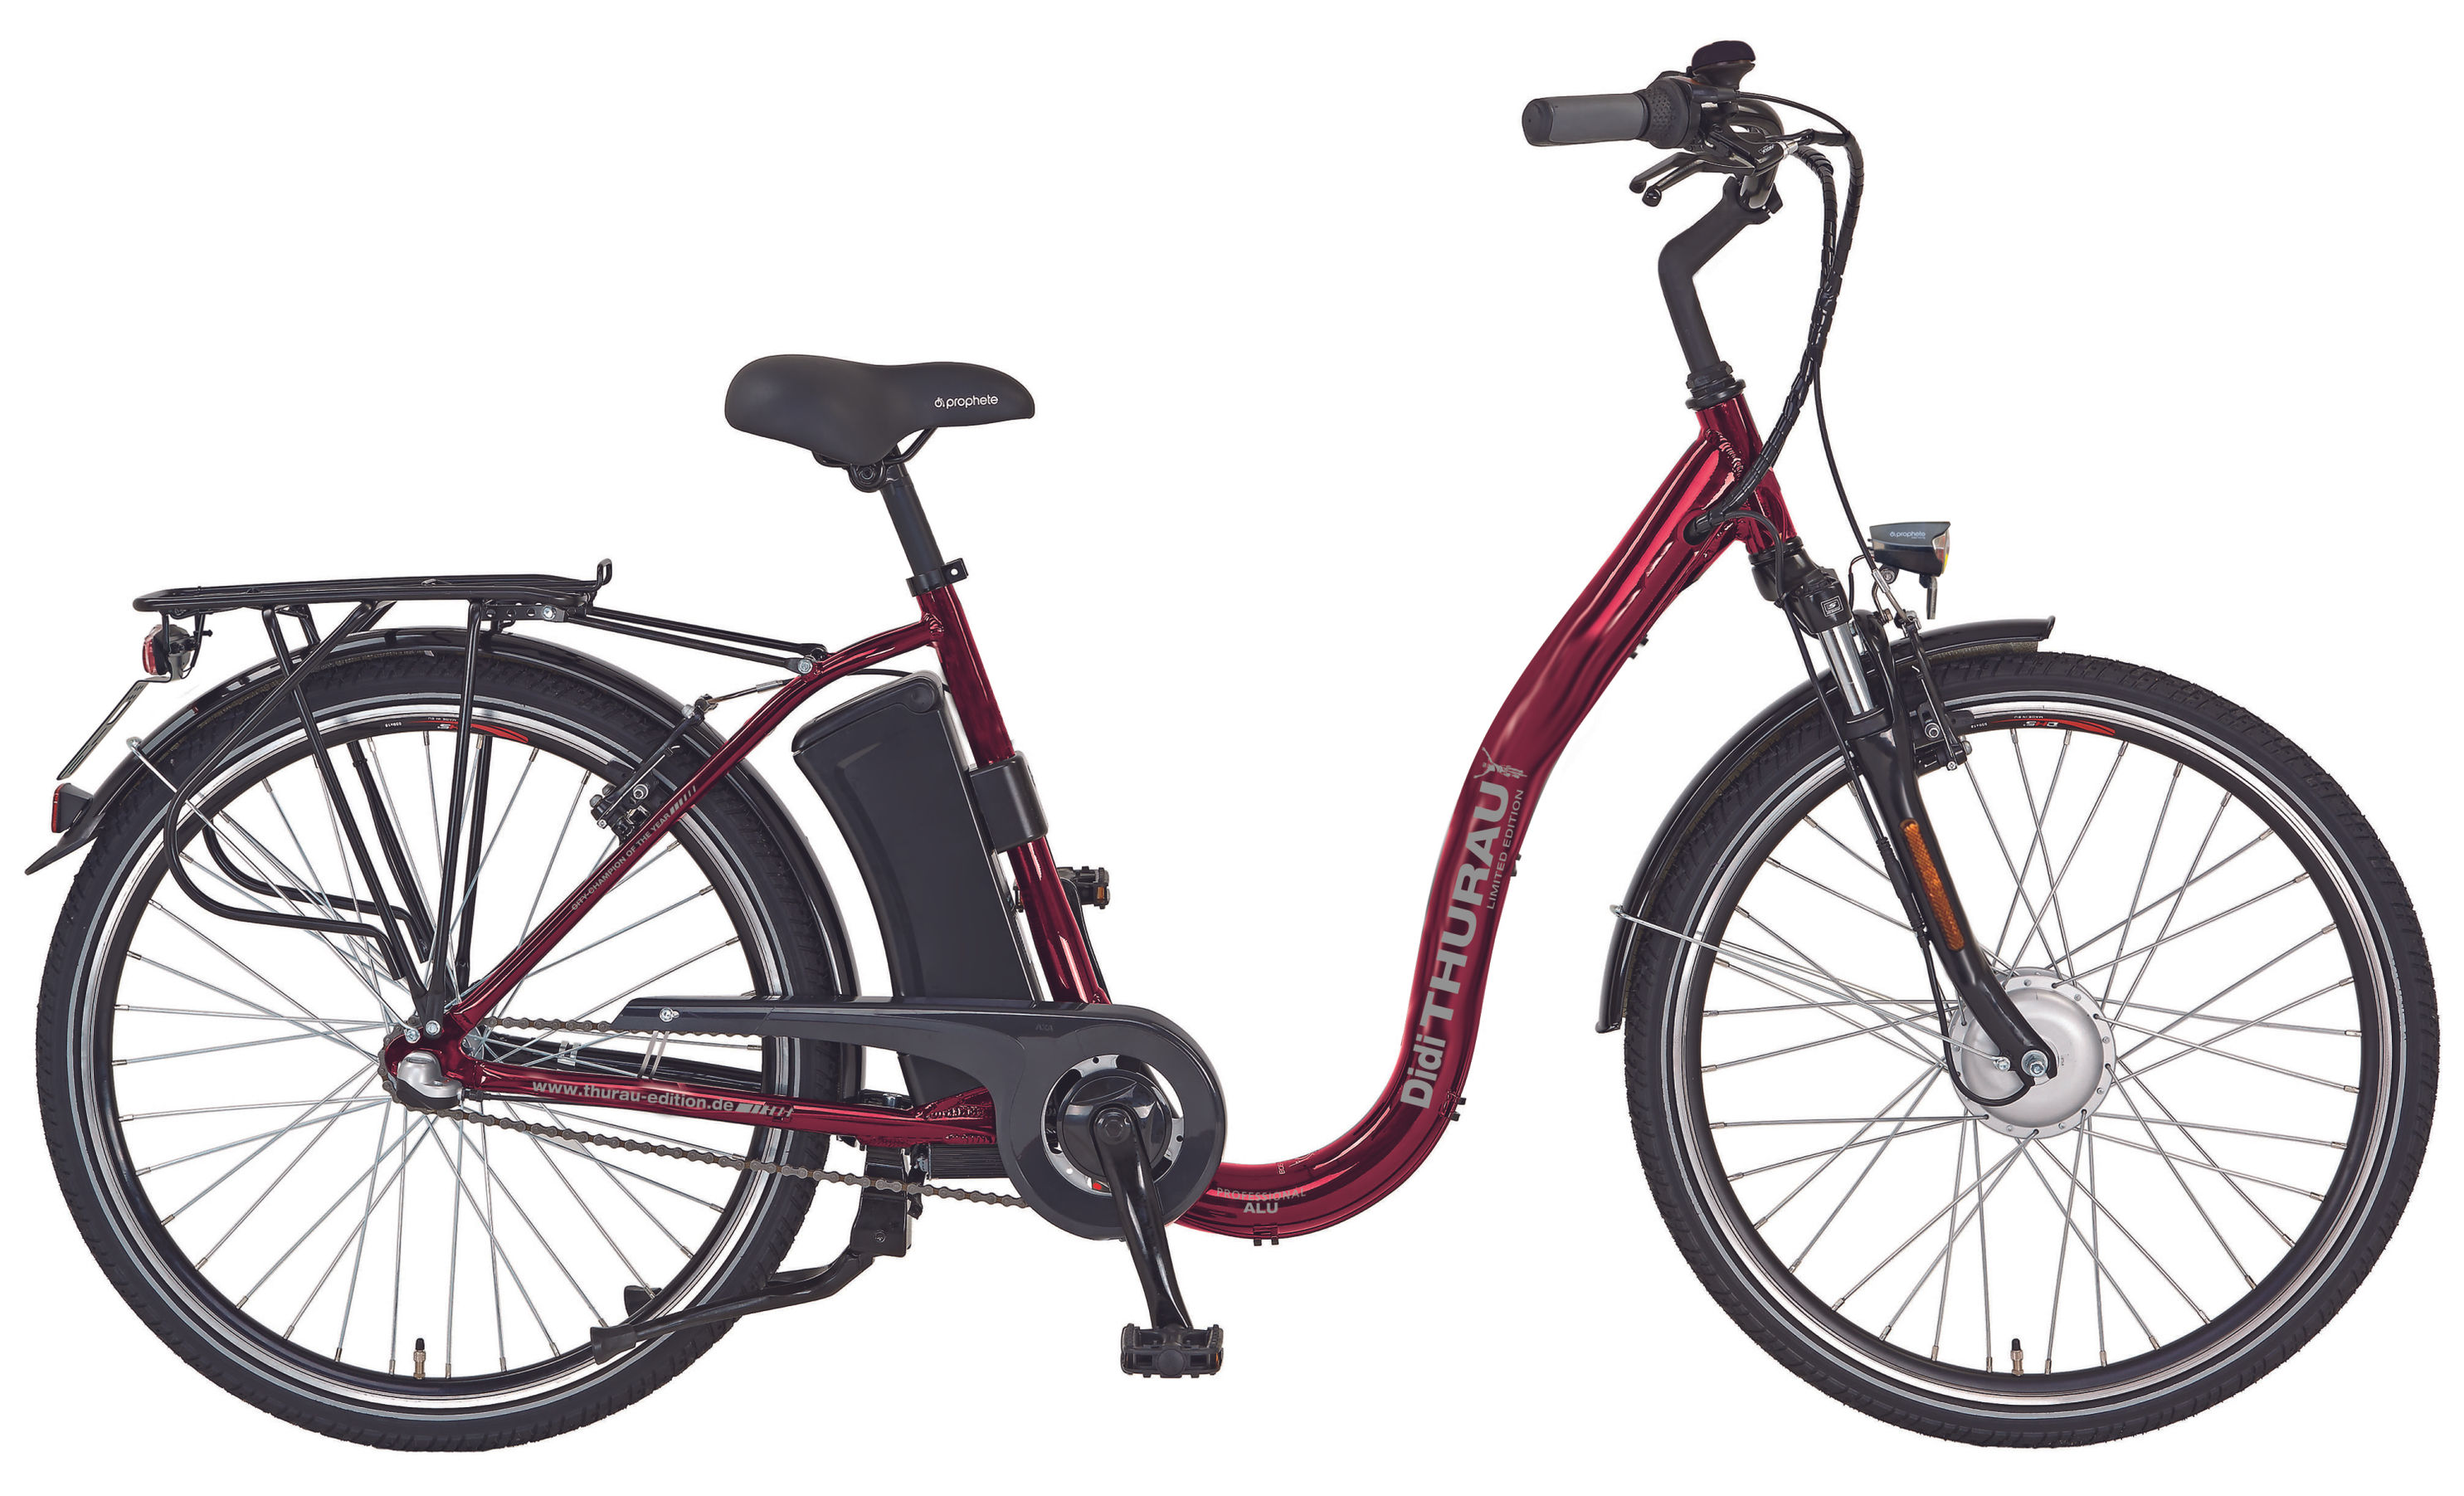 DTE E-Bike Alu City Comfort 3 in 1 Typ: rot, 36 V 10,4 Ah | Weltbild.de